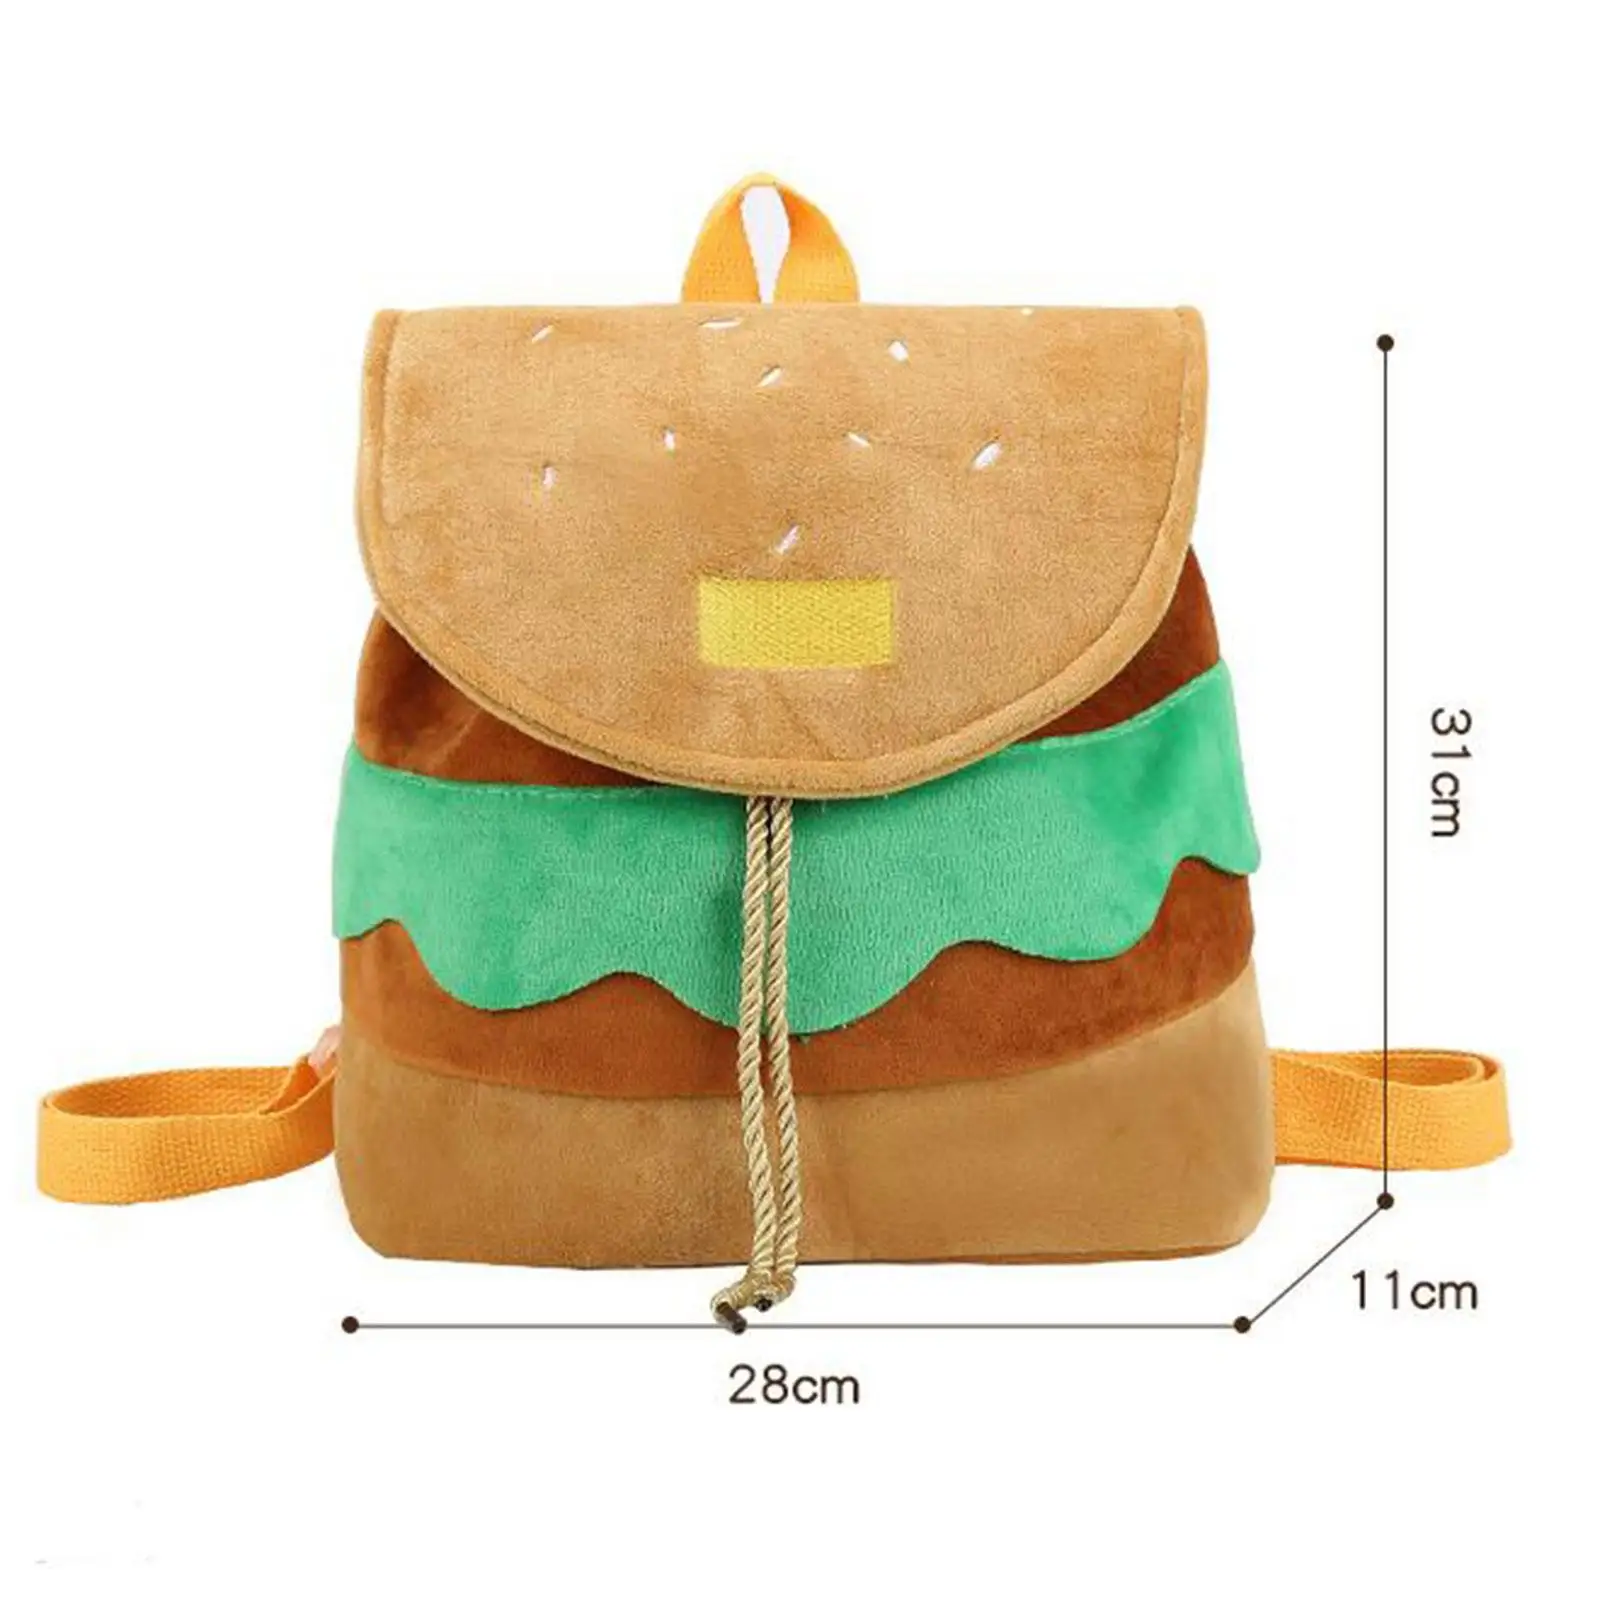 Hamburger Backpack Daypack for Travel School Bag for Girls Boys Women Adults